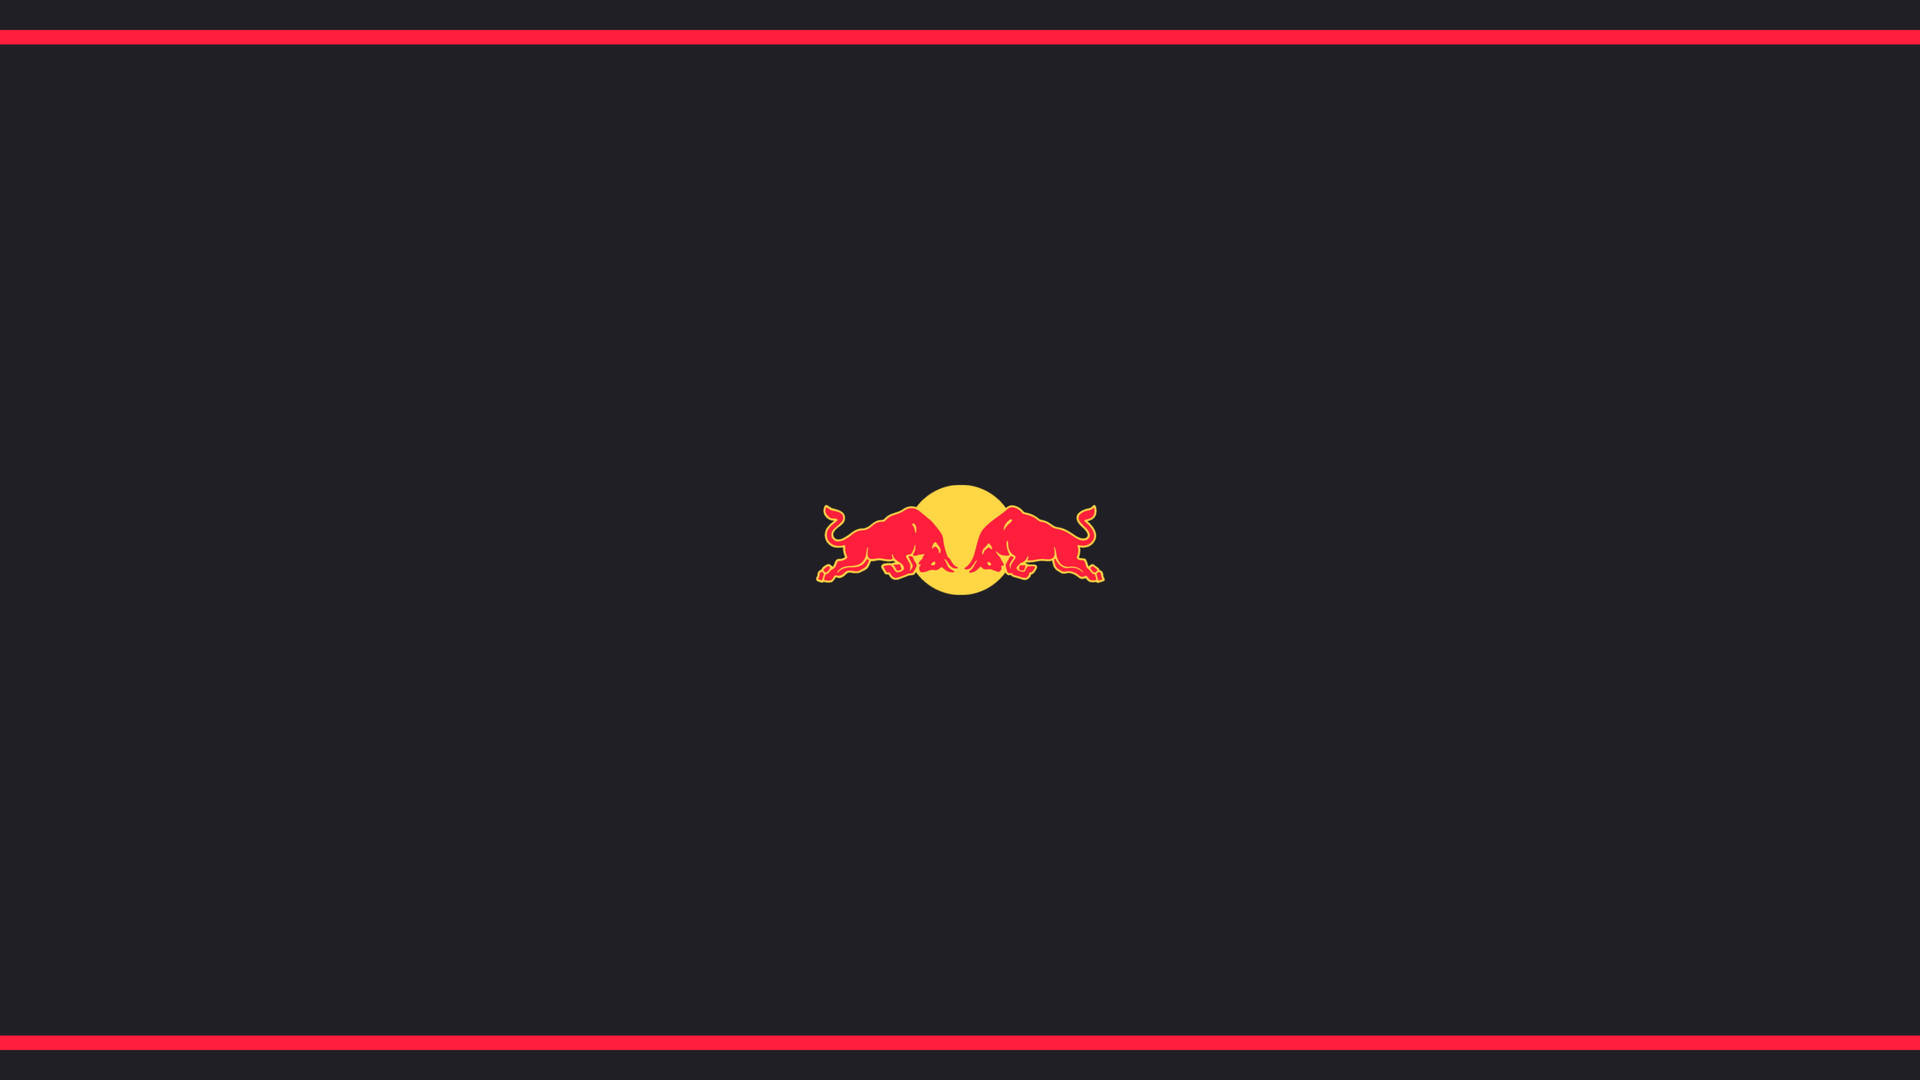 Minimalist Red Bull Vector Background